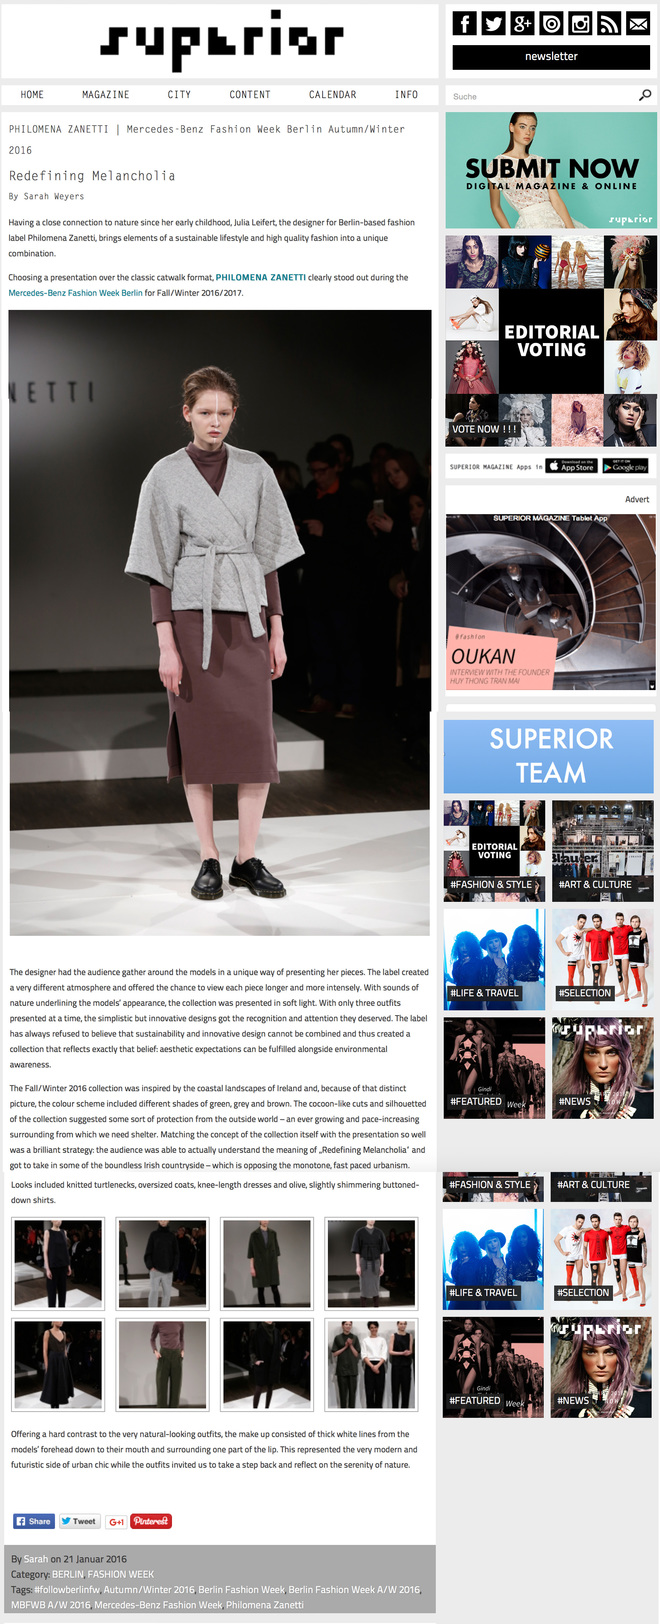 SUPERIOR MAGAZINE
Mercedes Benz Fashion Week Berlin a/w 16/17
Show Report Philomena Zanetti